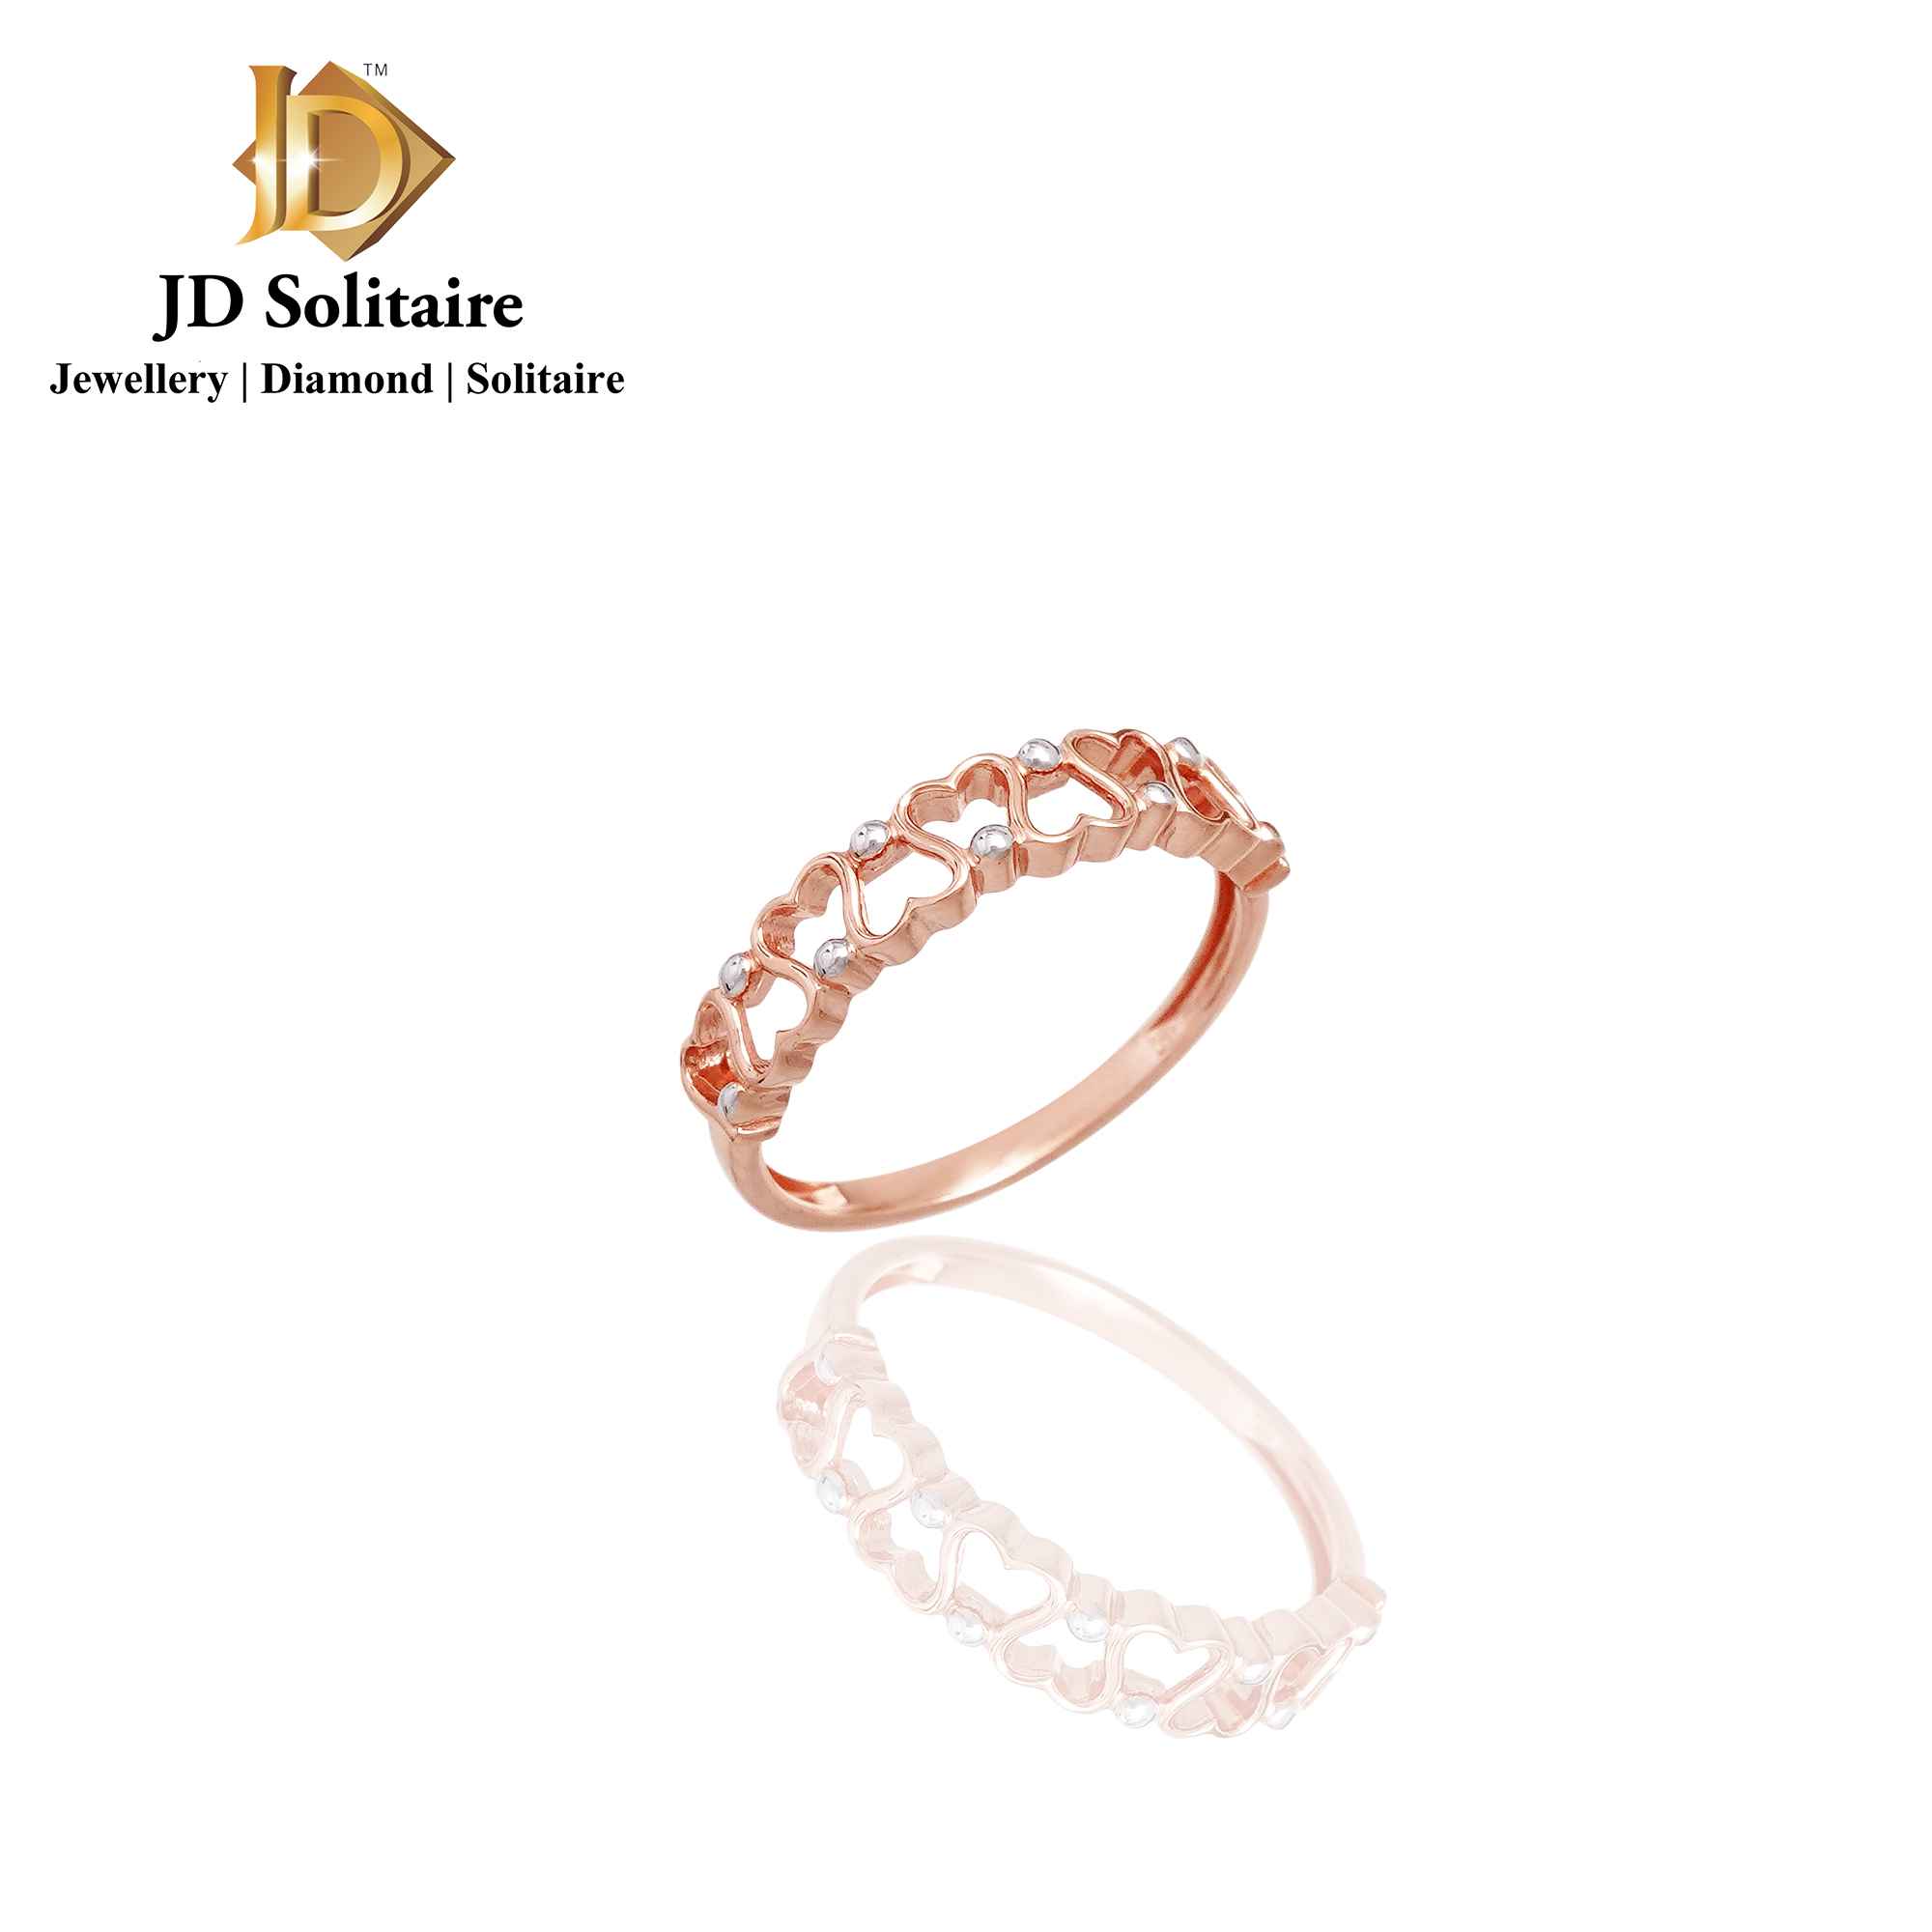 Handmade Matte Gold Plated Antique Adjustable Meenakari Finger Ring 216346  at Rs 175 | Fashion Rings in Mumbai | ID: 5744111188